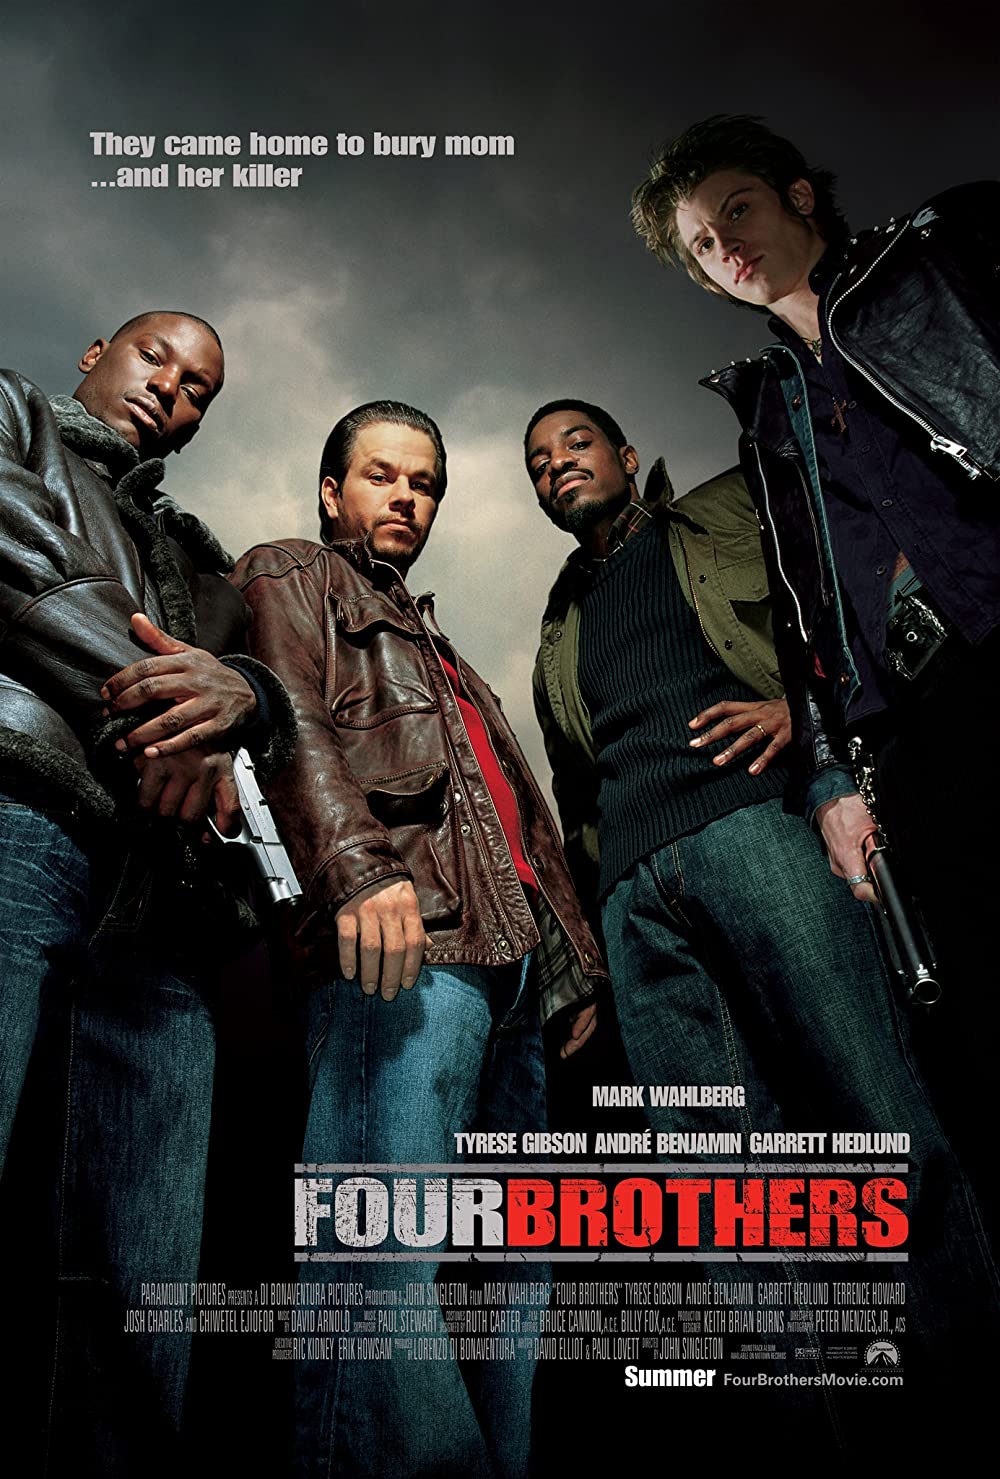 Four Brothers 4 (2005) ระห่ำดับแค้น